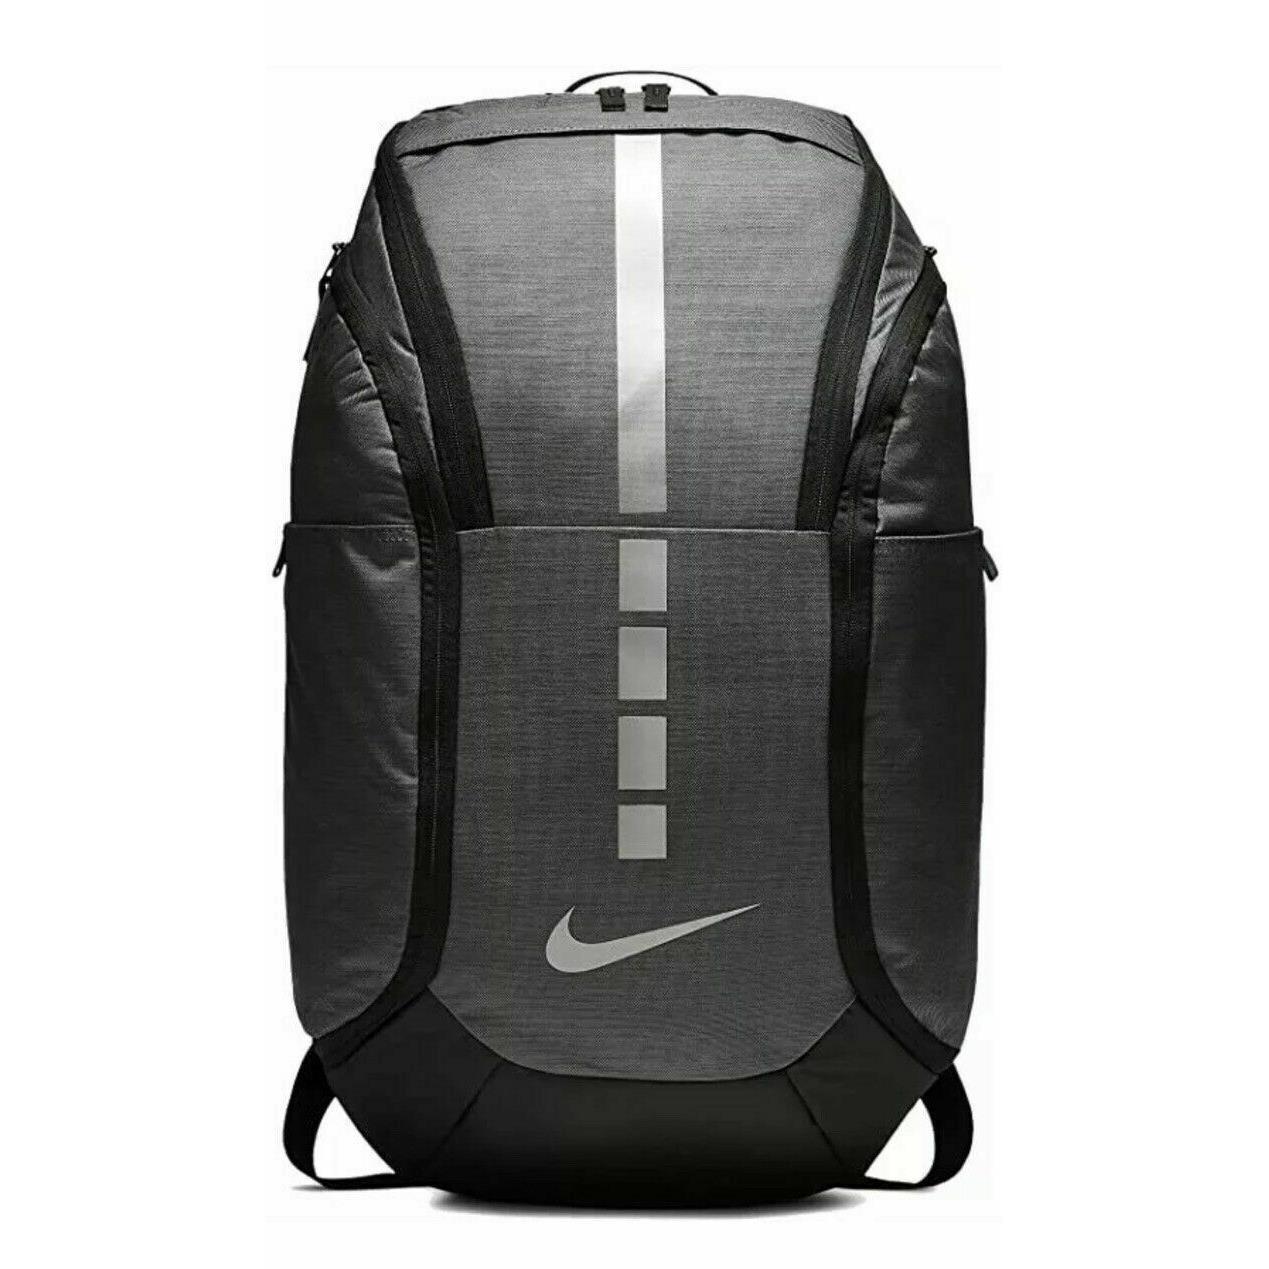 Nike Hoops Elite Unisex Pro Backpack- Gray/Black/Silver- NWT